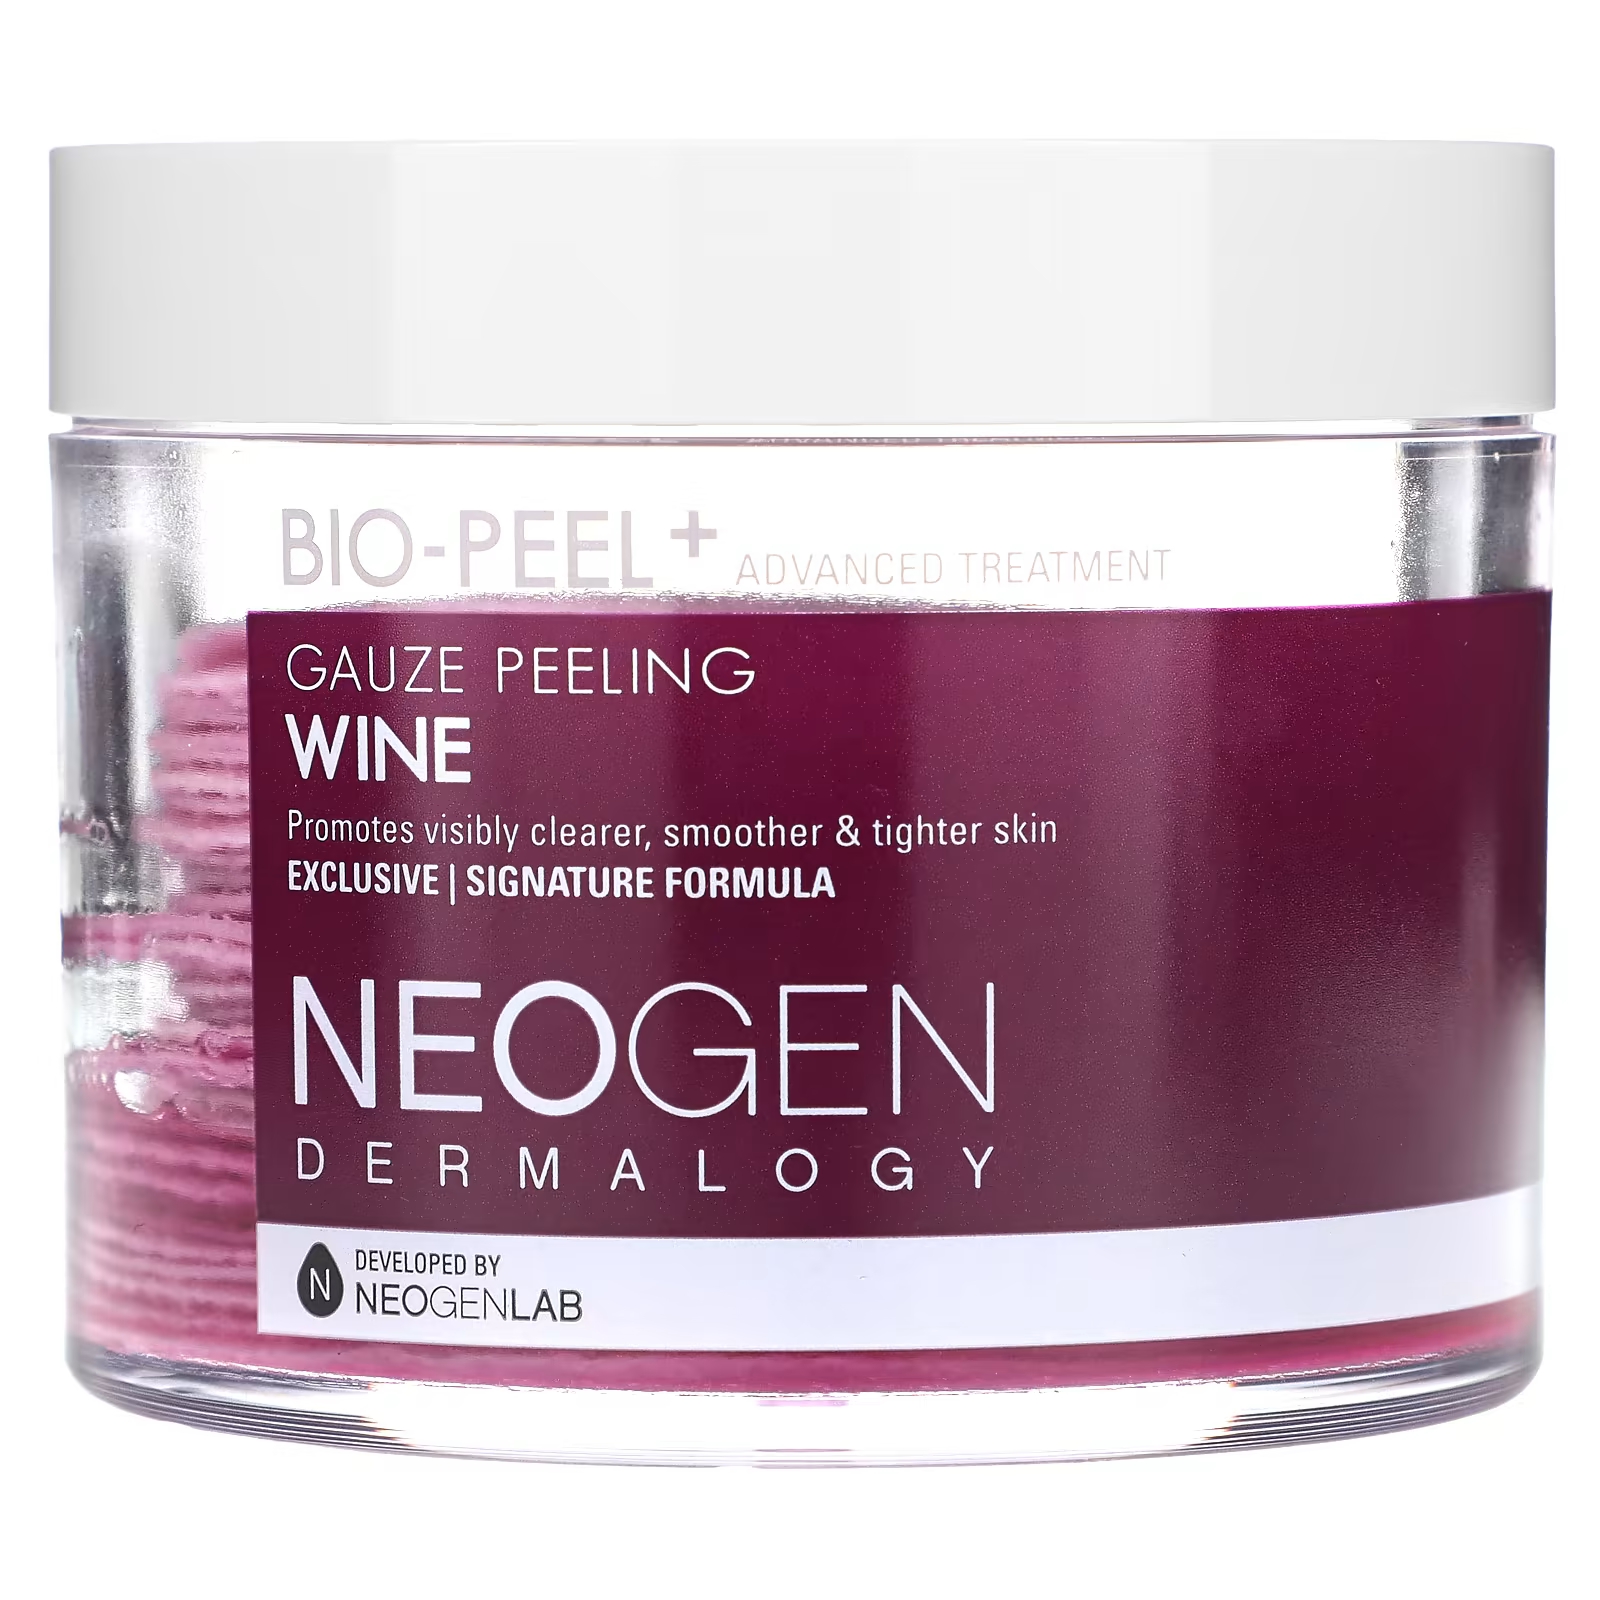 Neogen Dermalogy Bio-Peel + Advanced Treatment Gauze Peeling Wine, 30 штук, 6,76 жидких унций (200 мл) цена и фото